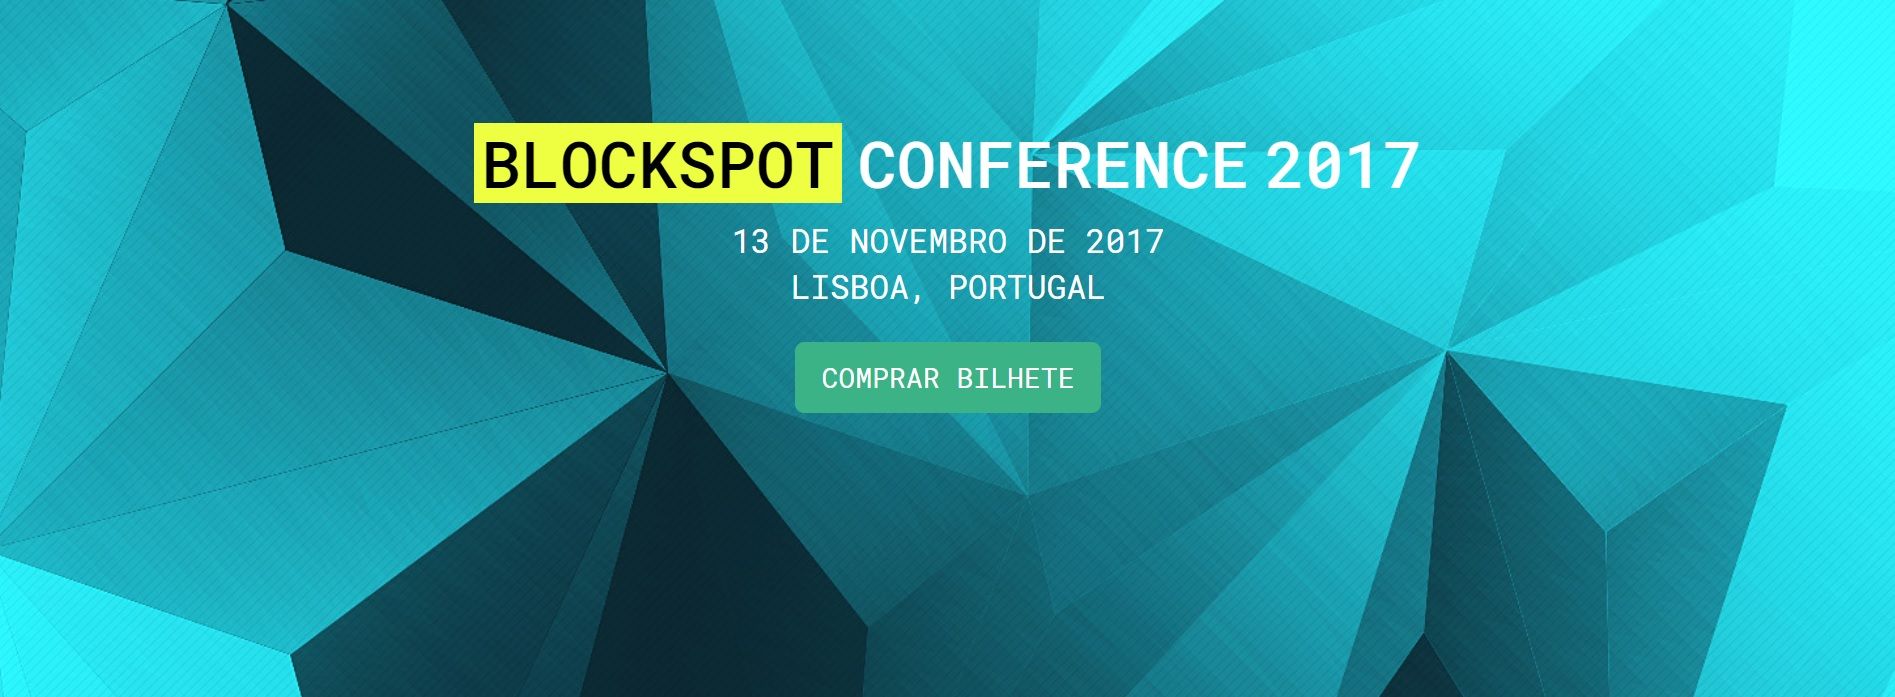 Blockspot Conference Passatempo